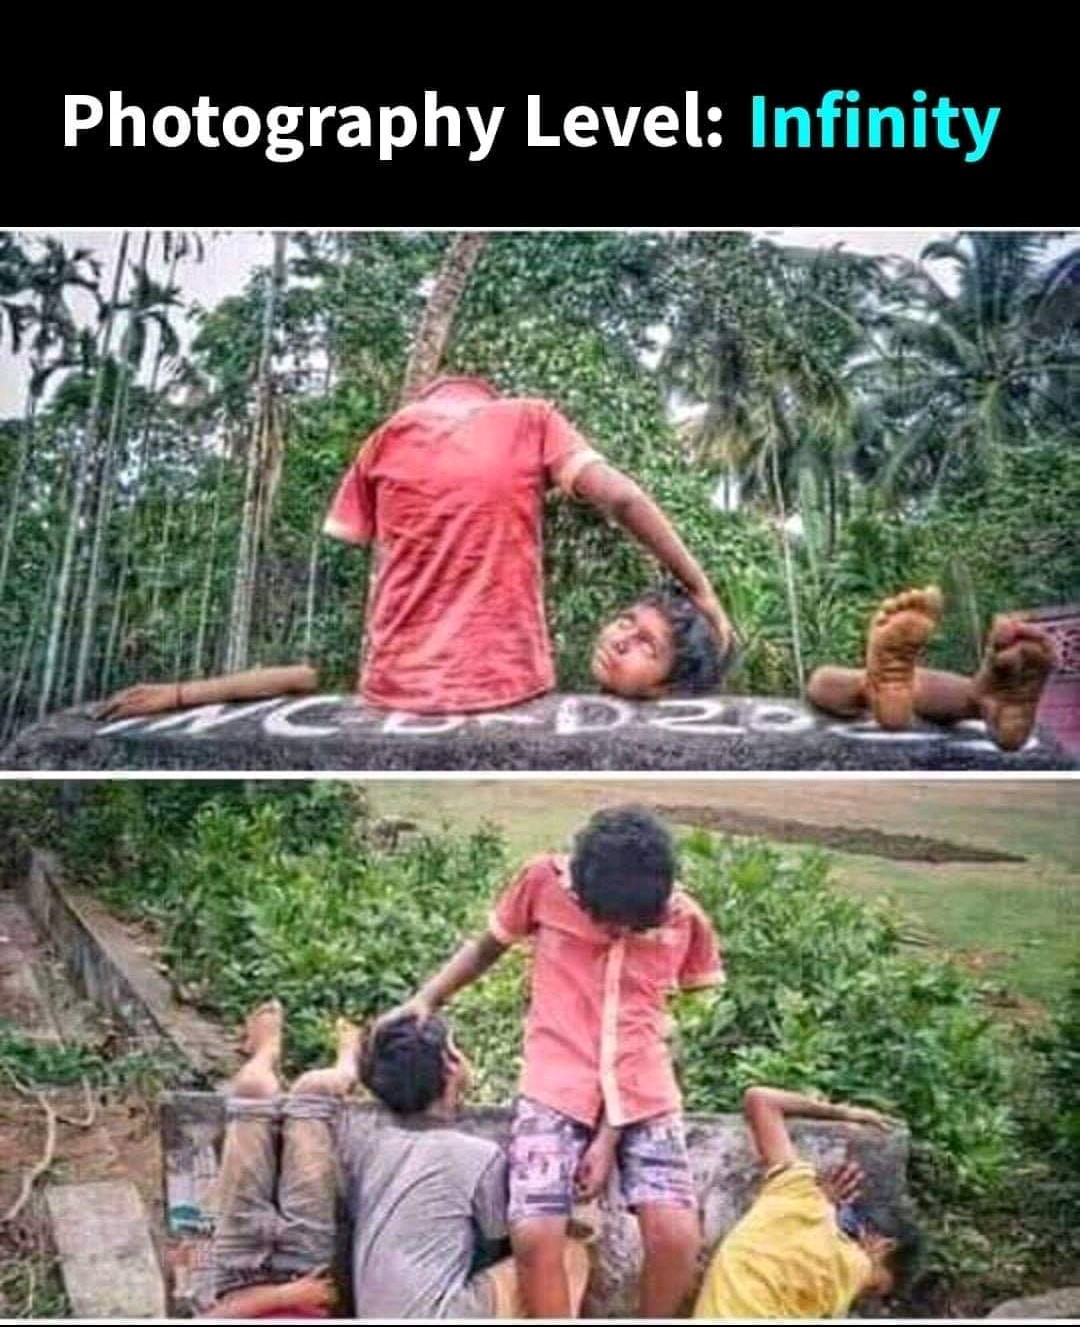 photography level infinity - Photography Level Infinity